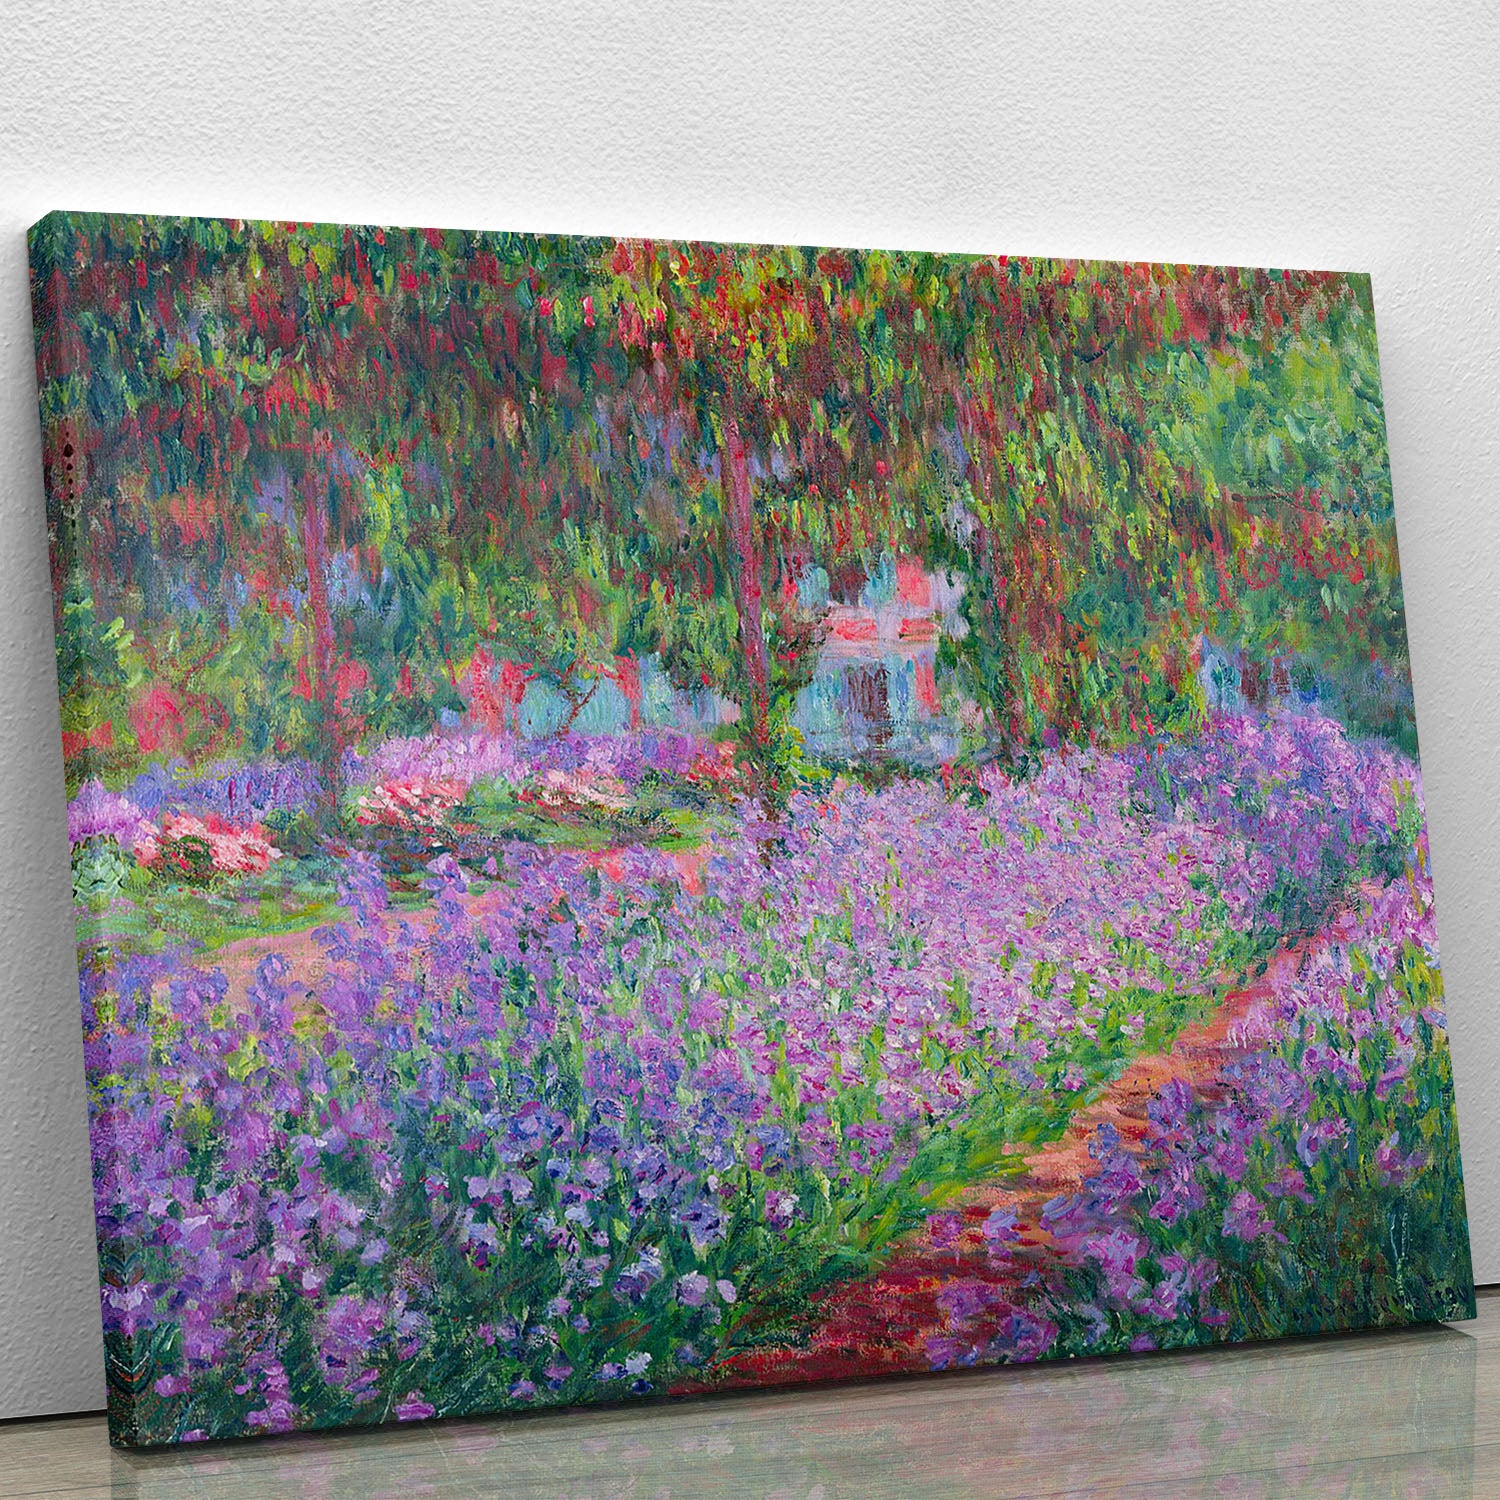 Artists Garden by Monet Canvas Print or Poster - Canvas Art Rocks - 1